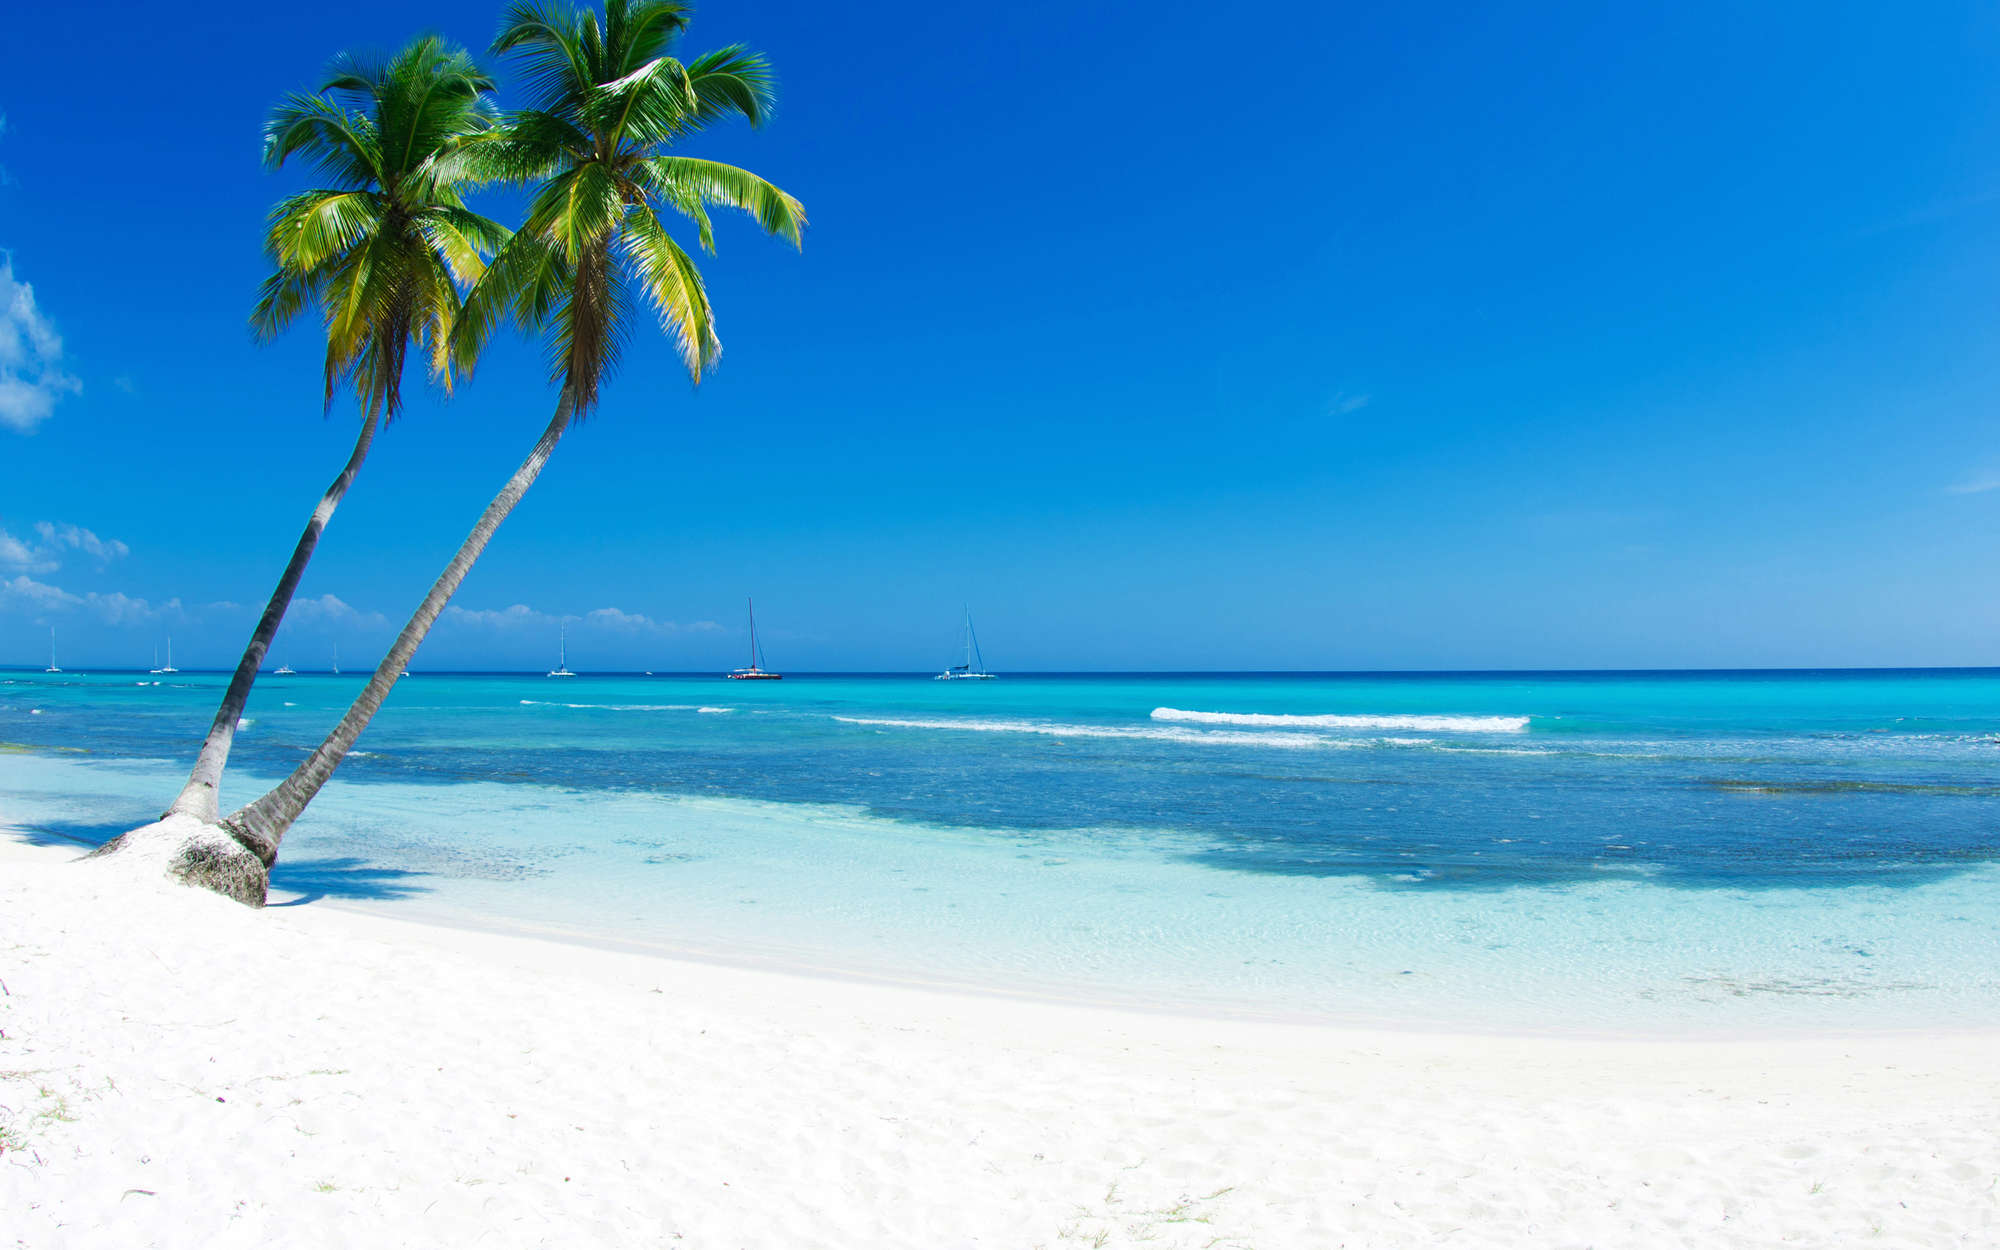             Photo wallpaper sandy beach in white with palm tree - Matt smooth fleece
        